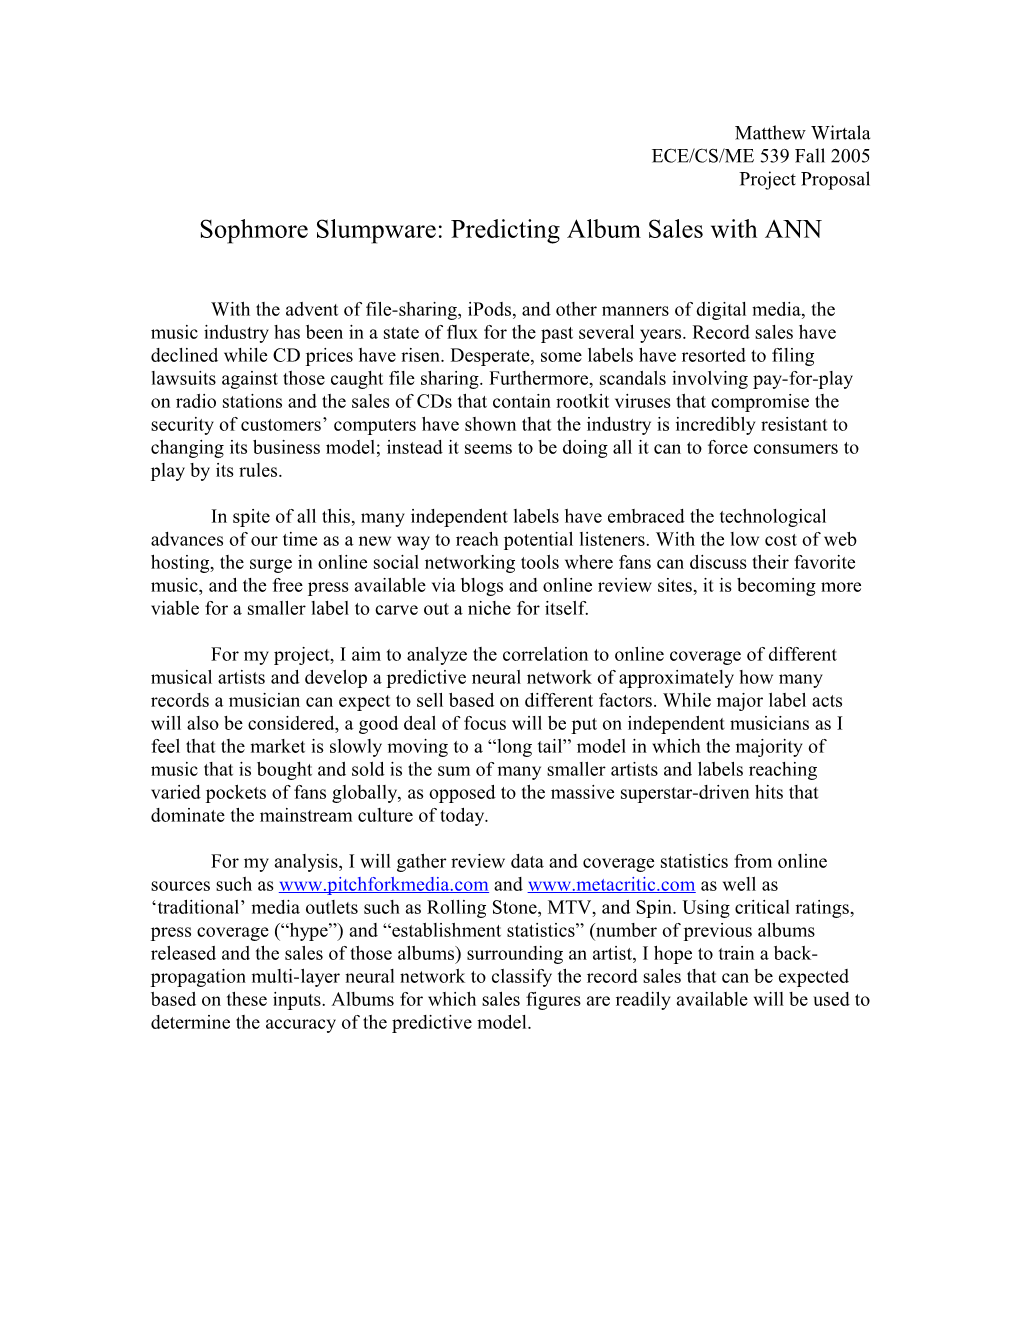 Sophmore Slumpware: Predicting Album Sales with ANN